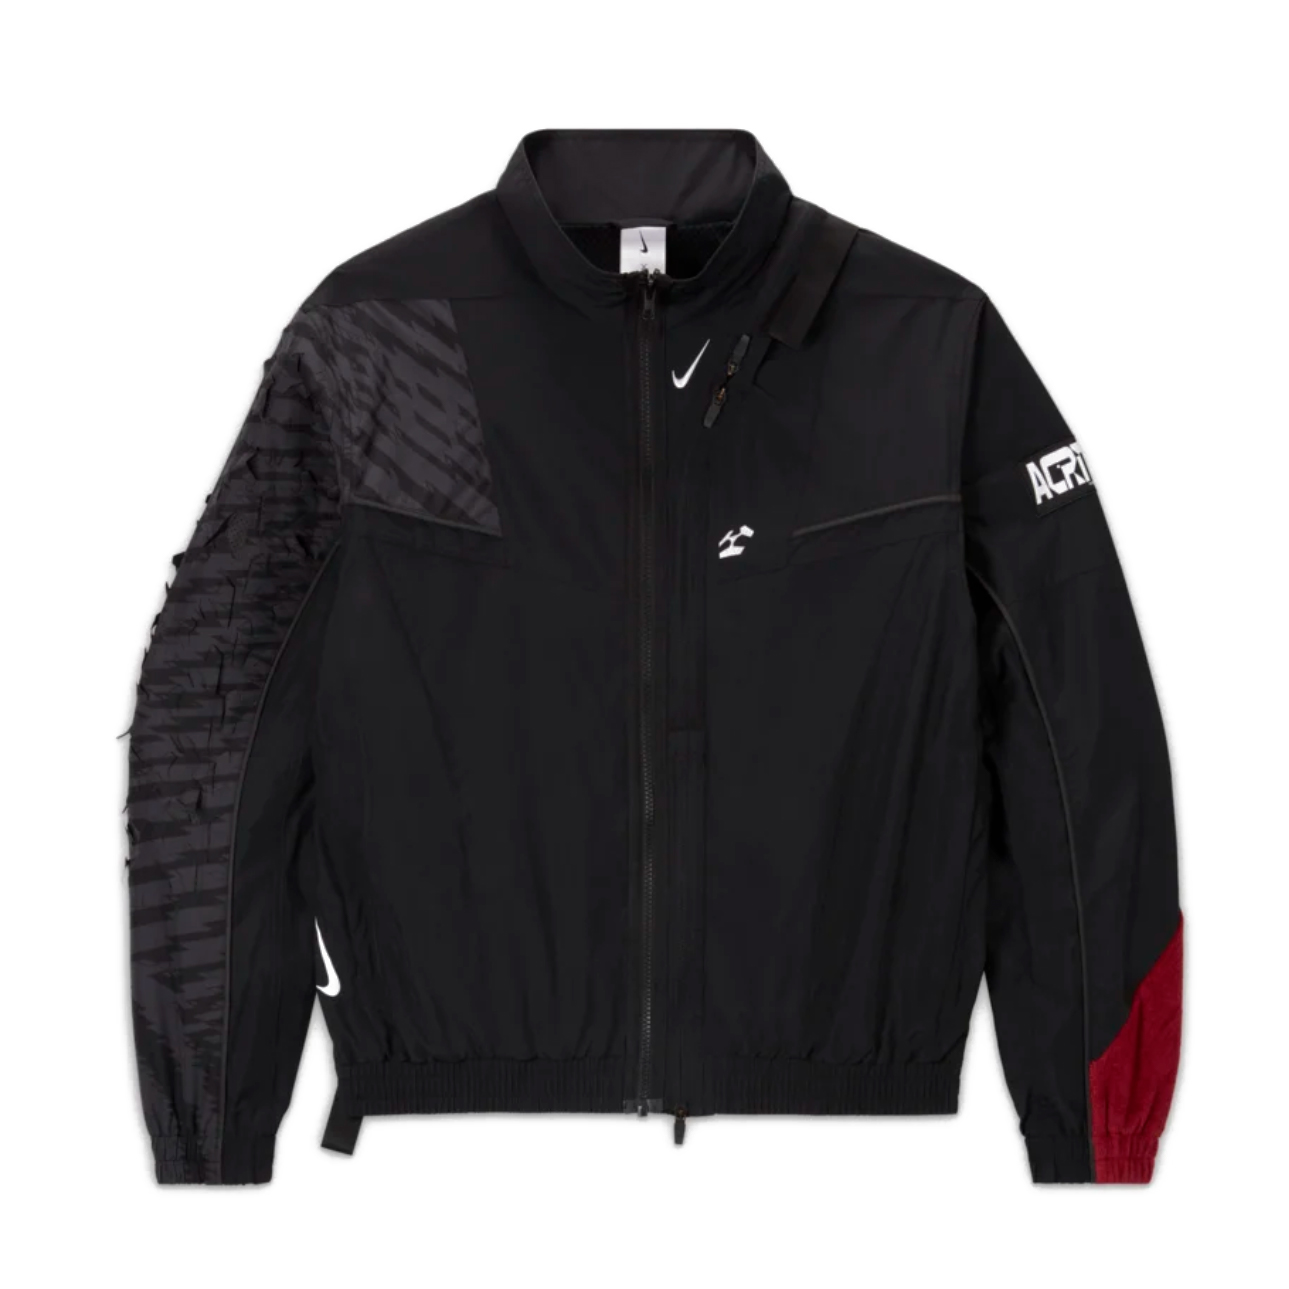 NikeLab Collection Wet Reveal Jacket Cool Grey/White Men's - GB